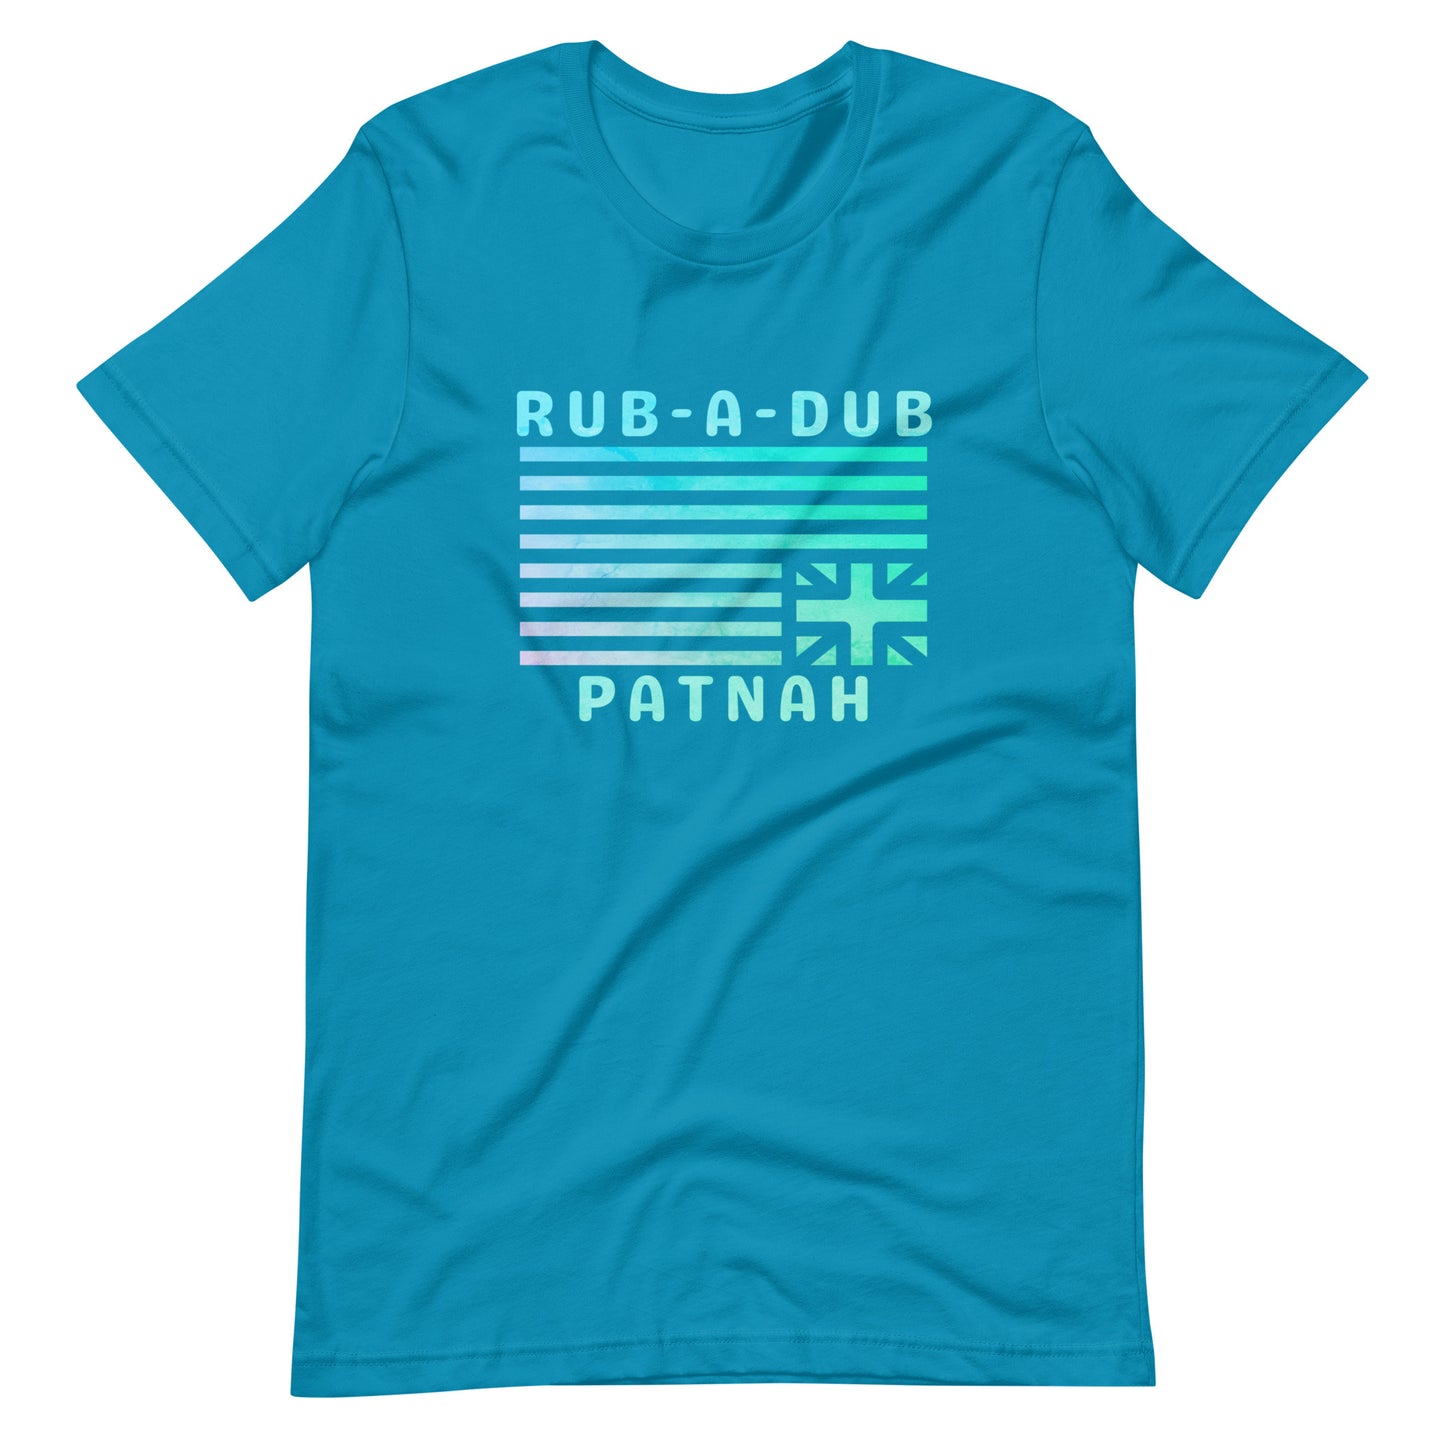 RUB-A-DUB PATNAH Unisex t-shirt